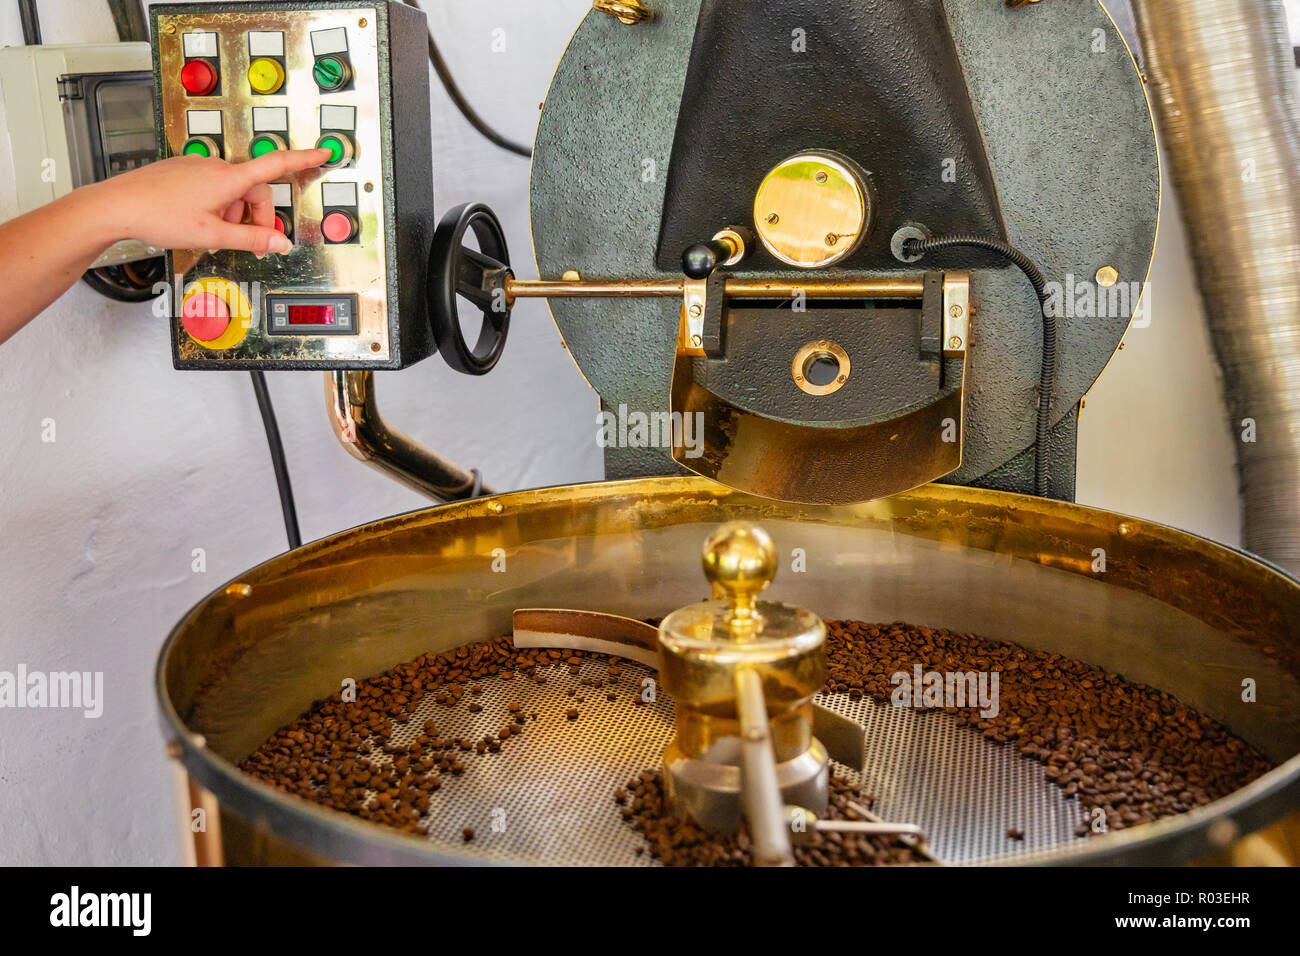 Female Employee Pressing Machinery Button on Coffee Roaster Stock Photo